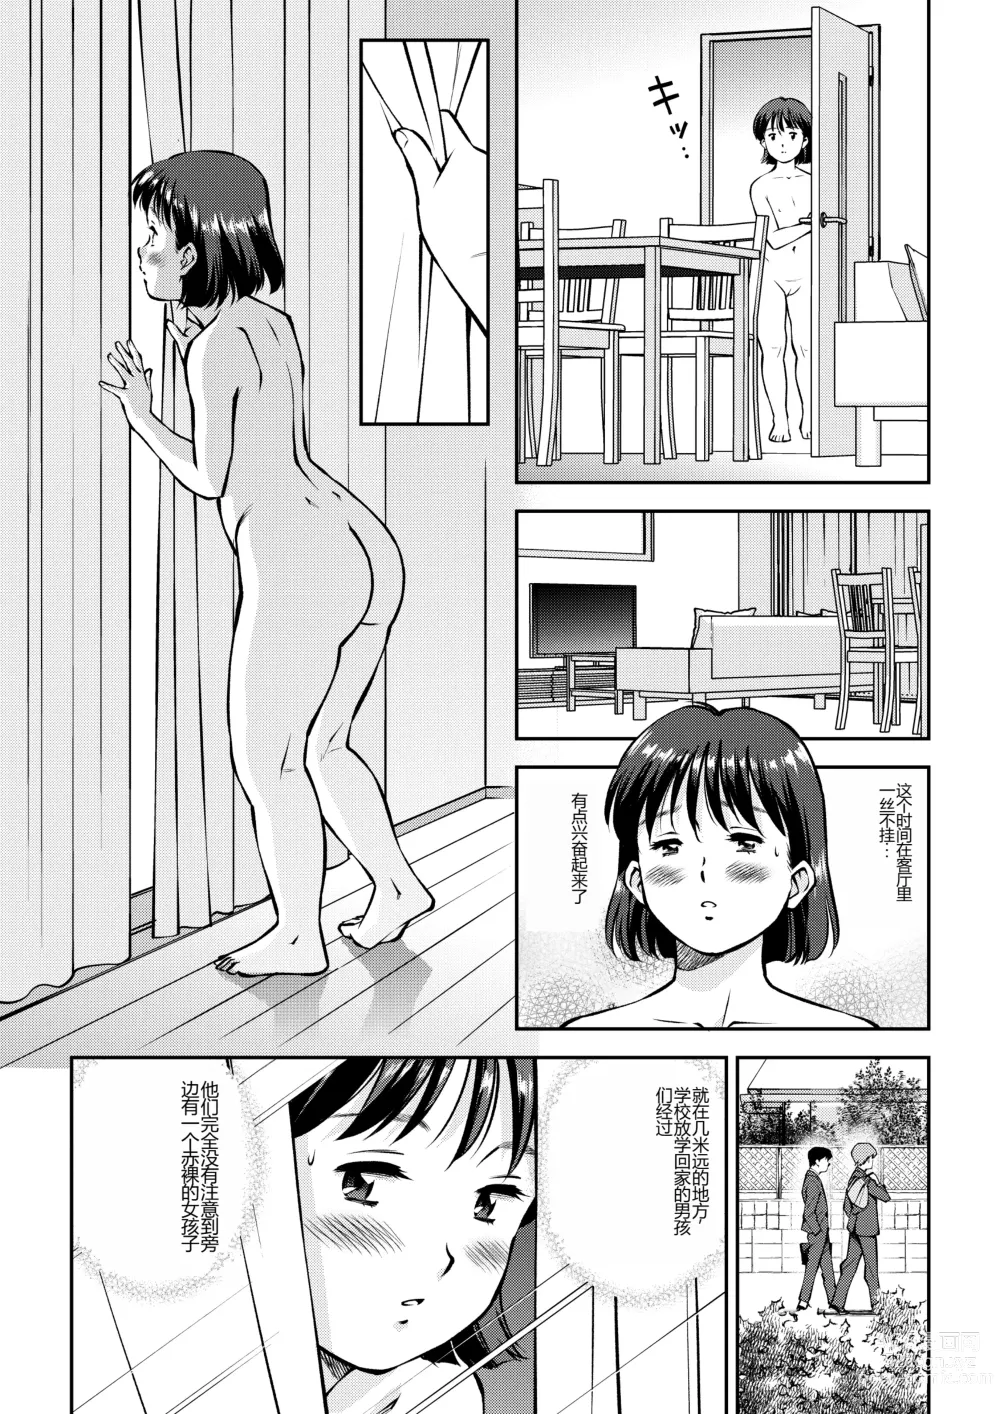 Page 6 of manga Unko Mamire de Orusuban